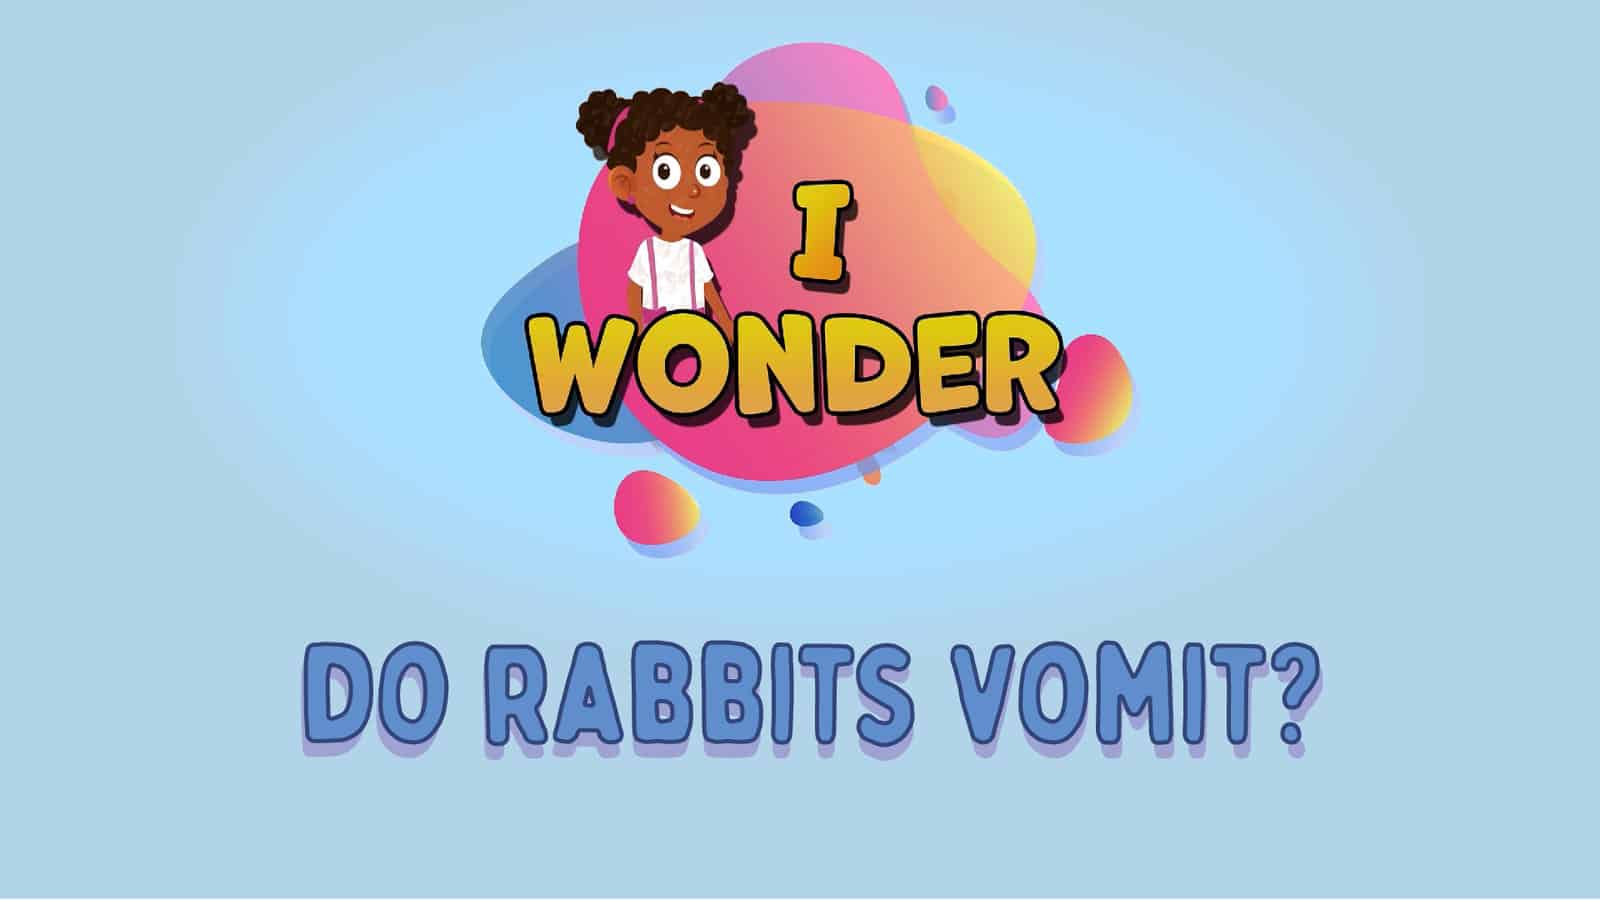 Rabbits Vomit LearningMole